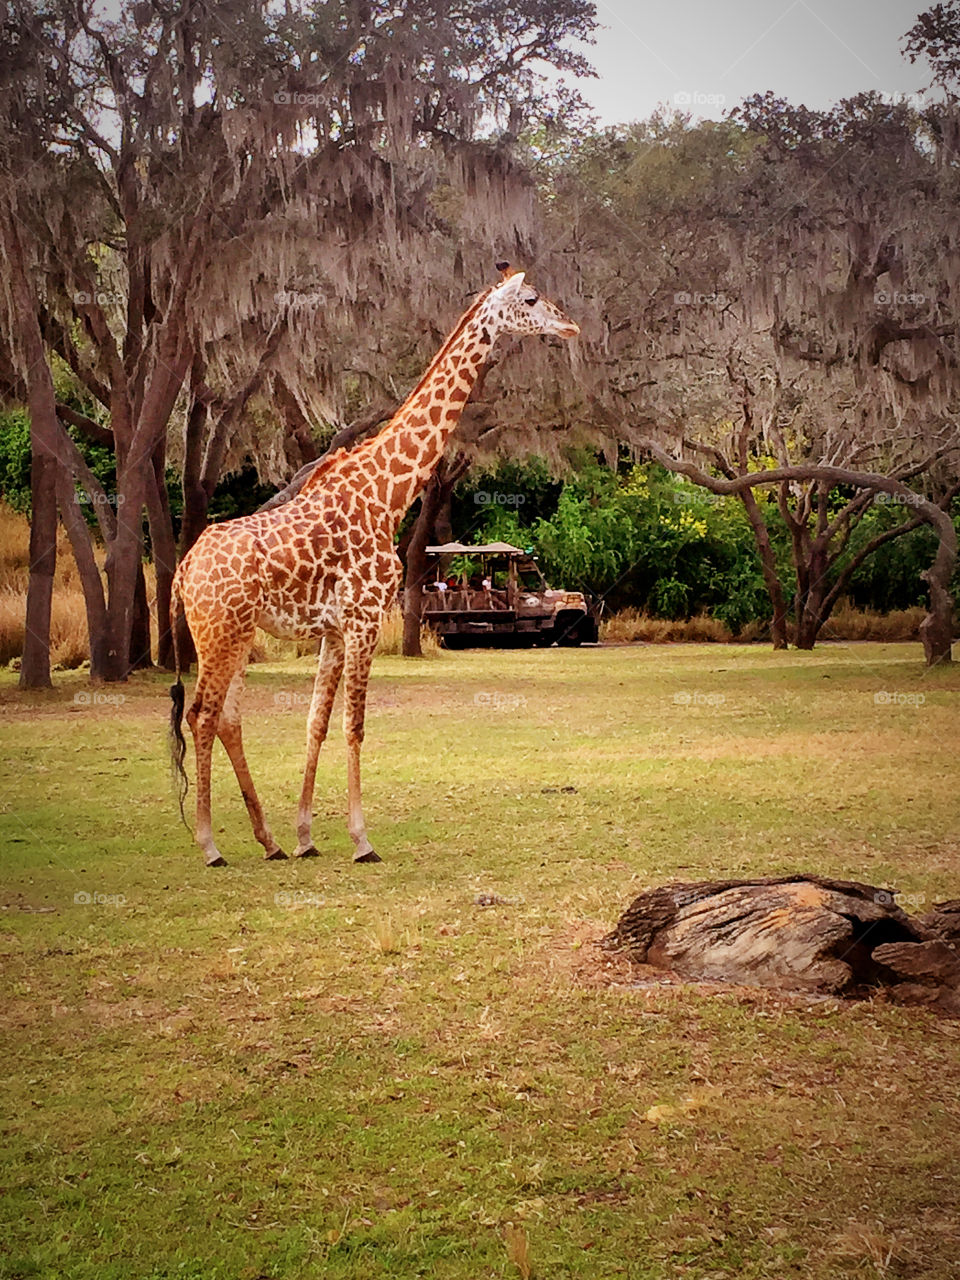 Giraffe in the safari park is walking